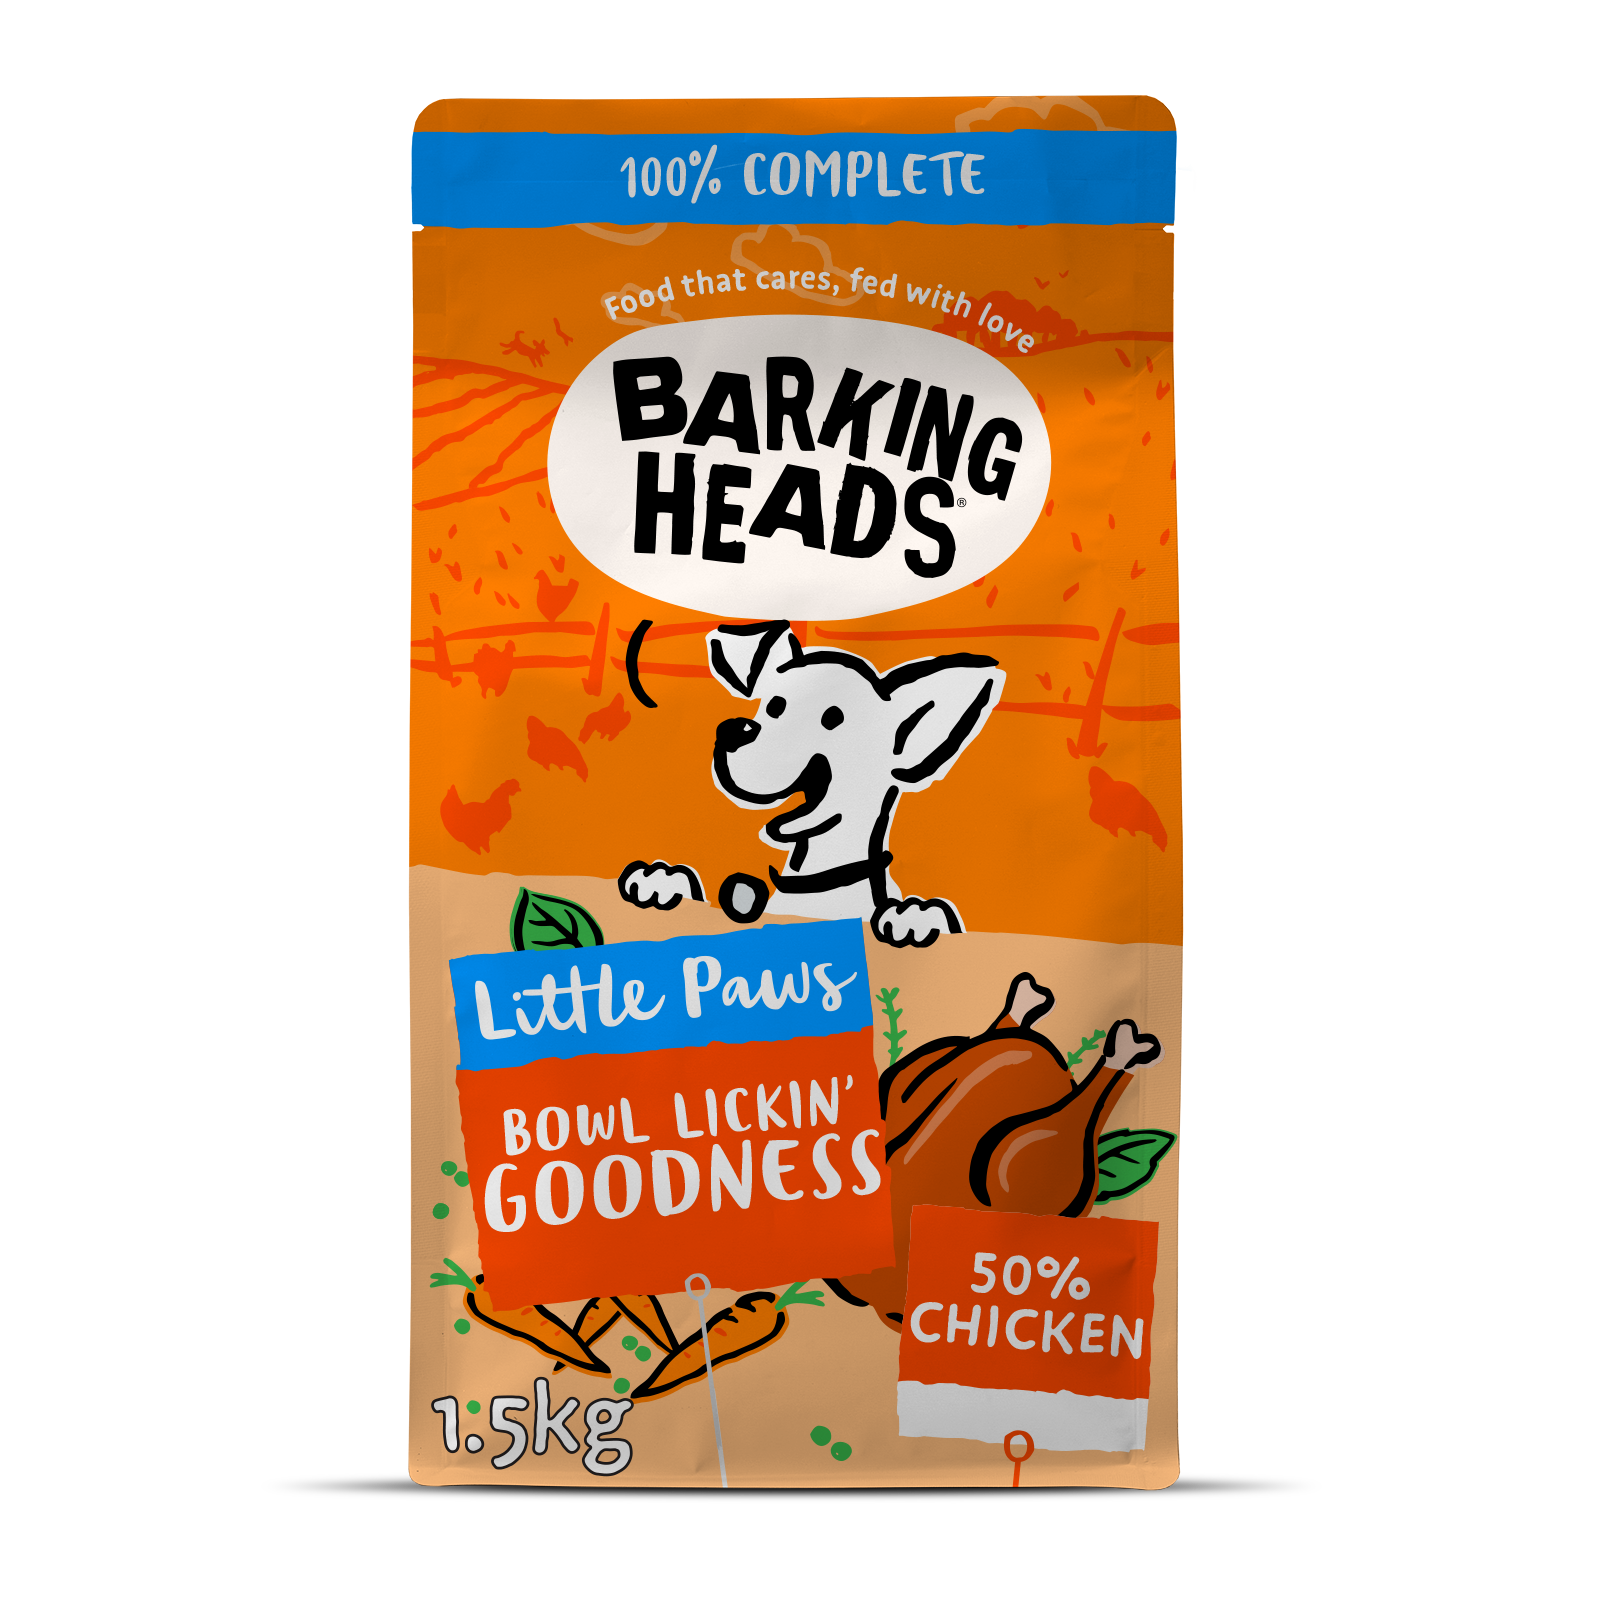 Barking Heads Little Paws Bowl Lickin' Goodness Chicken